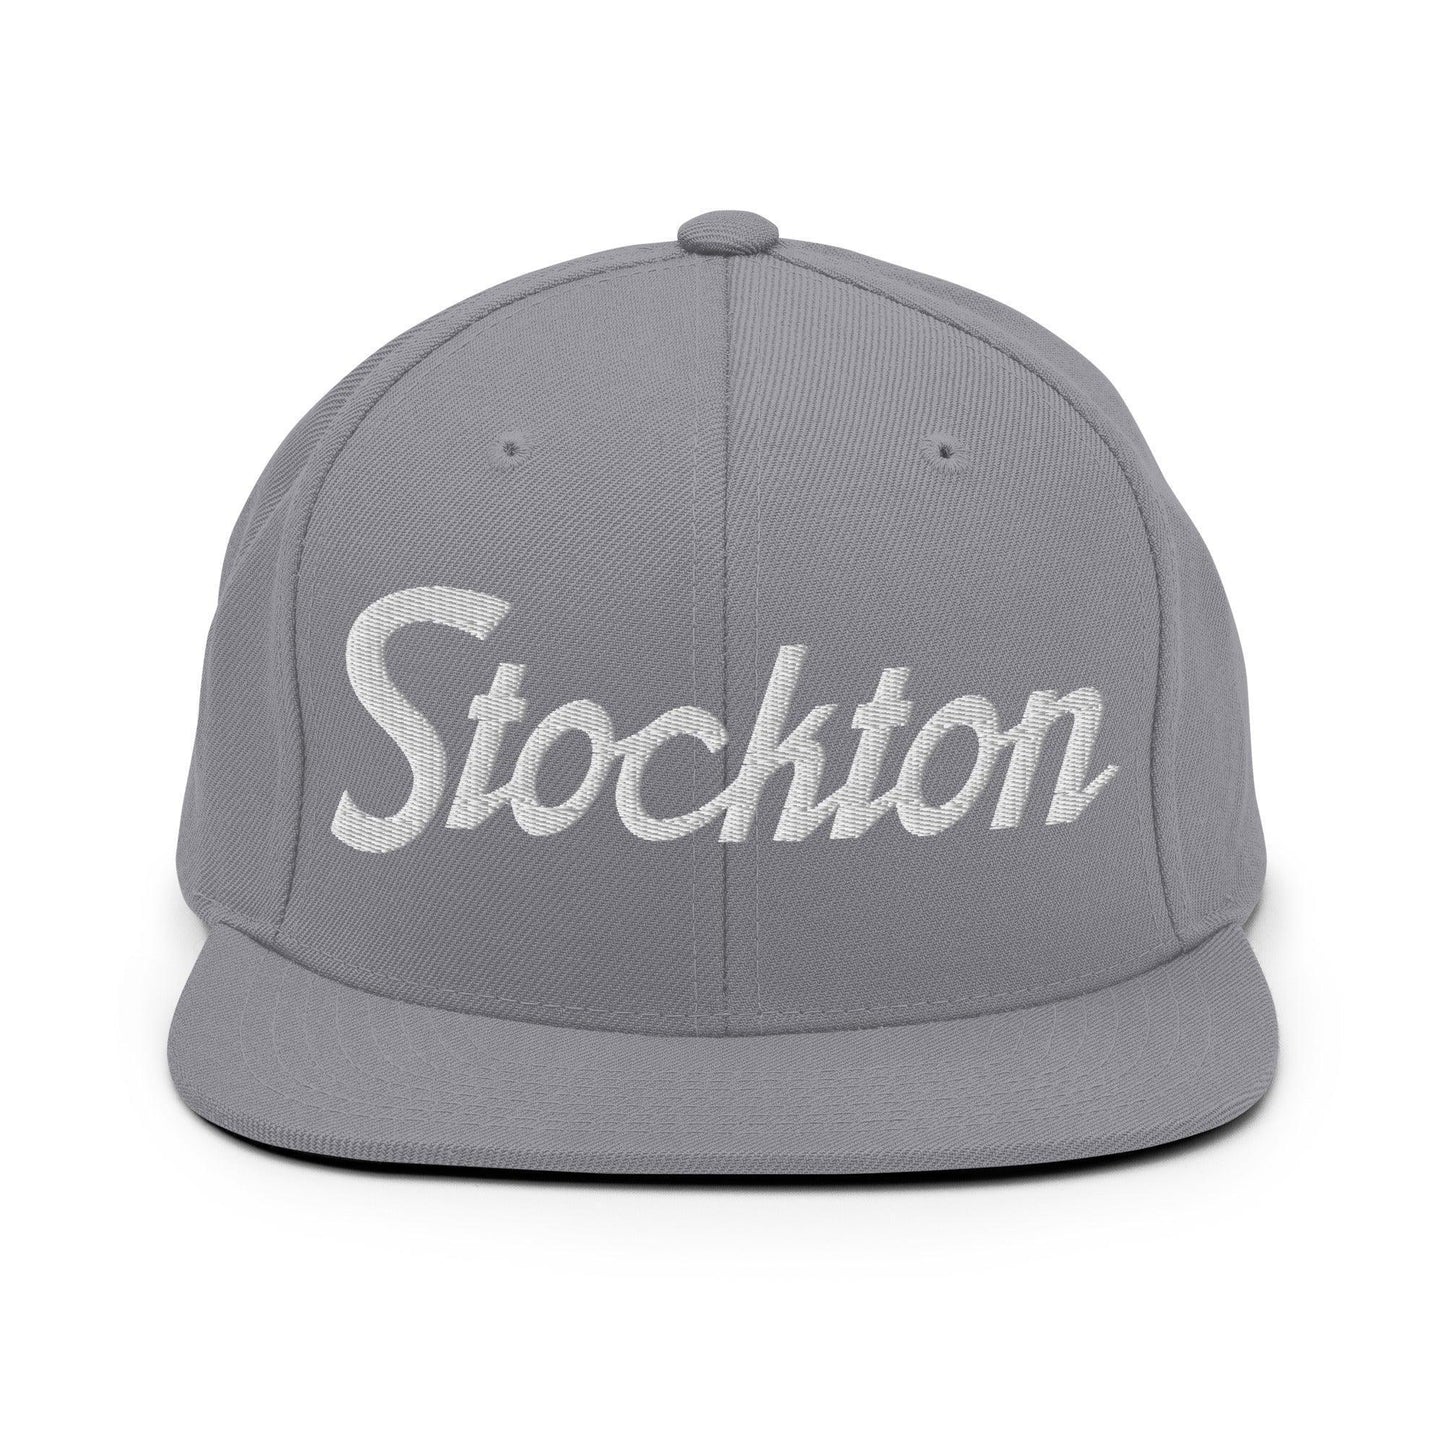 Stockton Script Snapback Hat Silver